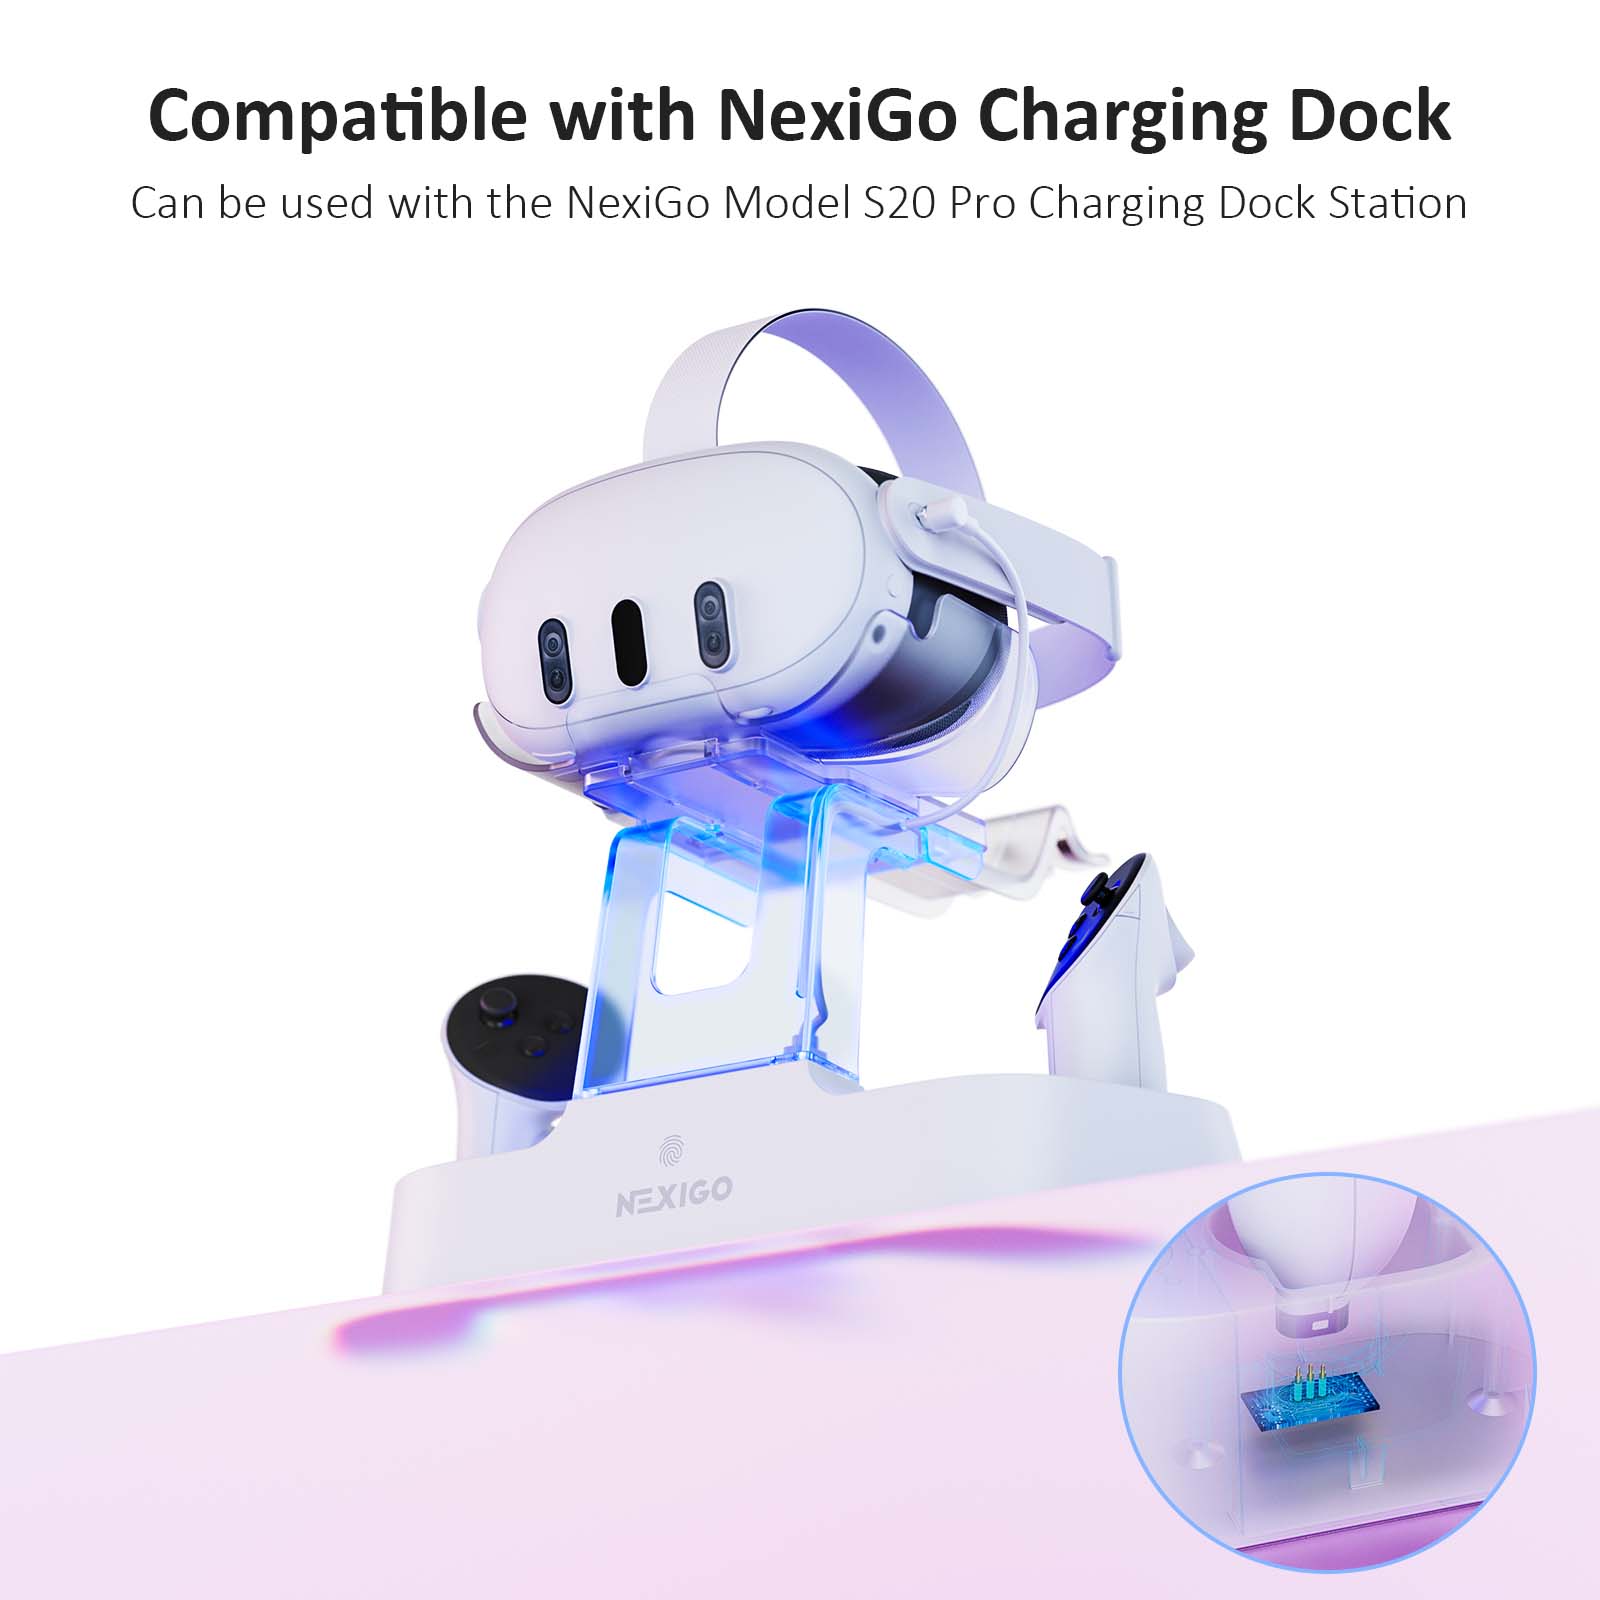 compatible with NexiGo charging dock